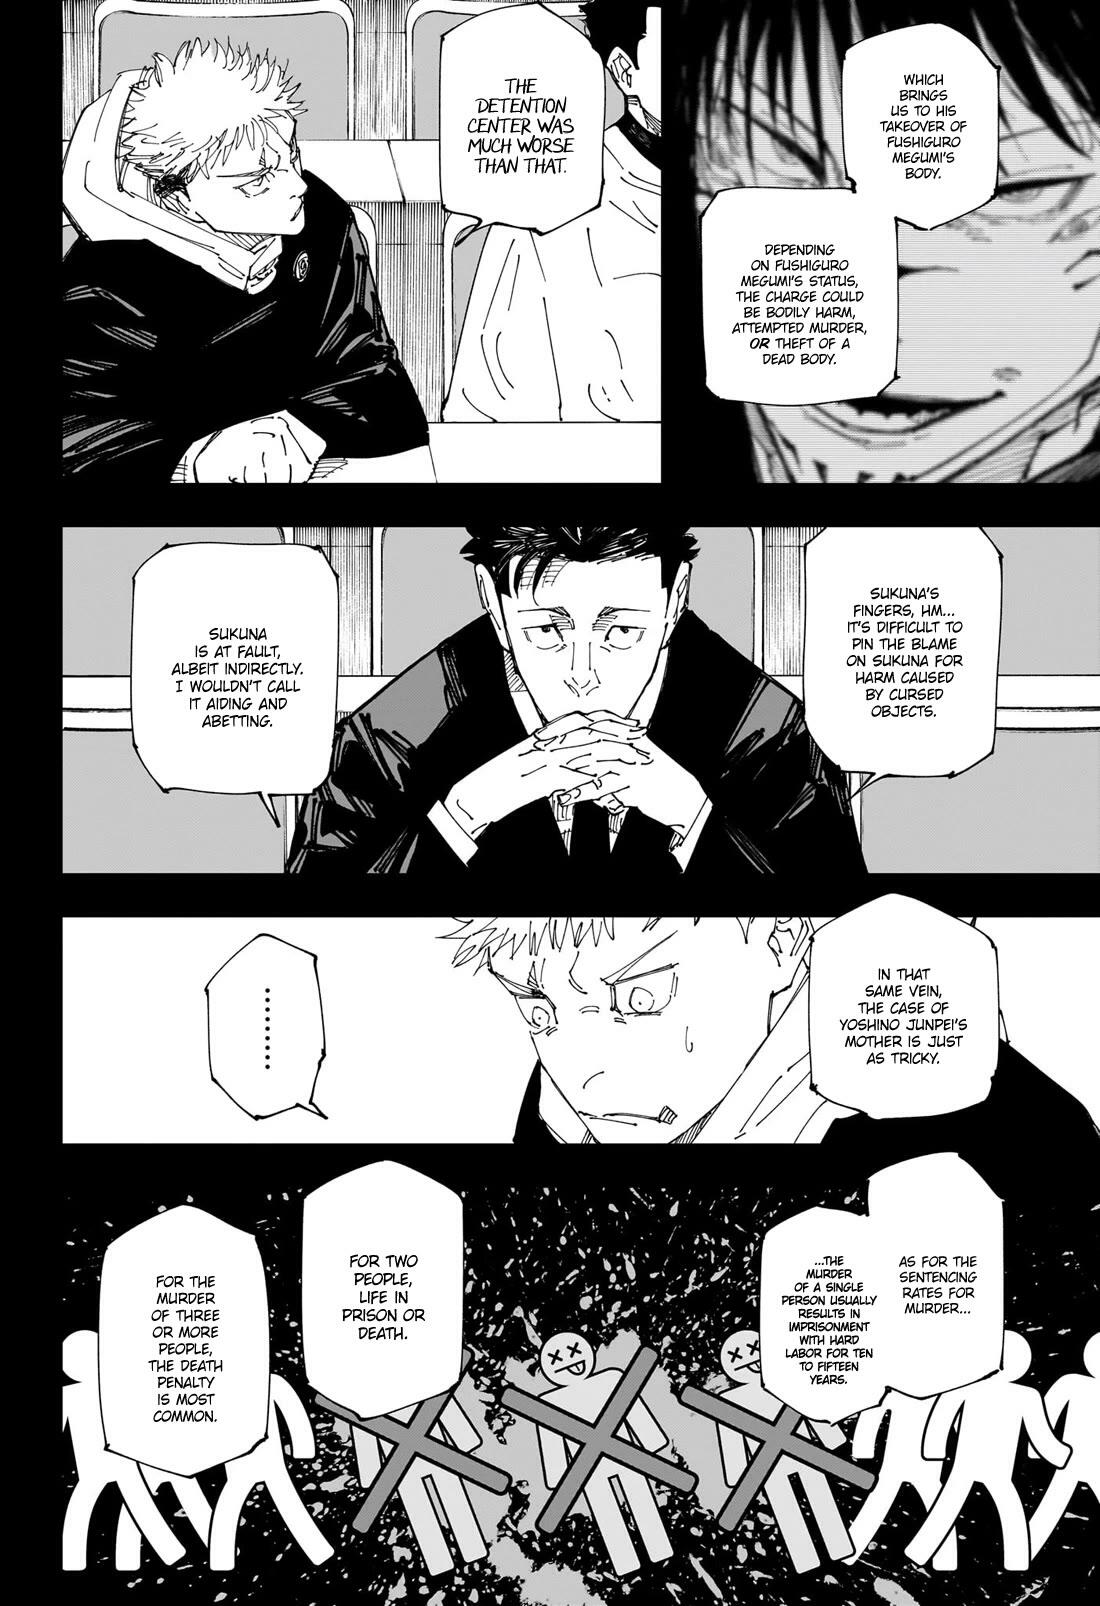 Jujutsu Kaisen Chapter 244: The Decisive Battle In The Uninhabited, Demon-Infested Shinjuku ⑯ page 7 - Mangakakalot